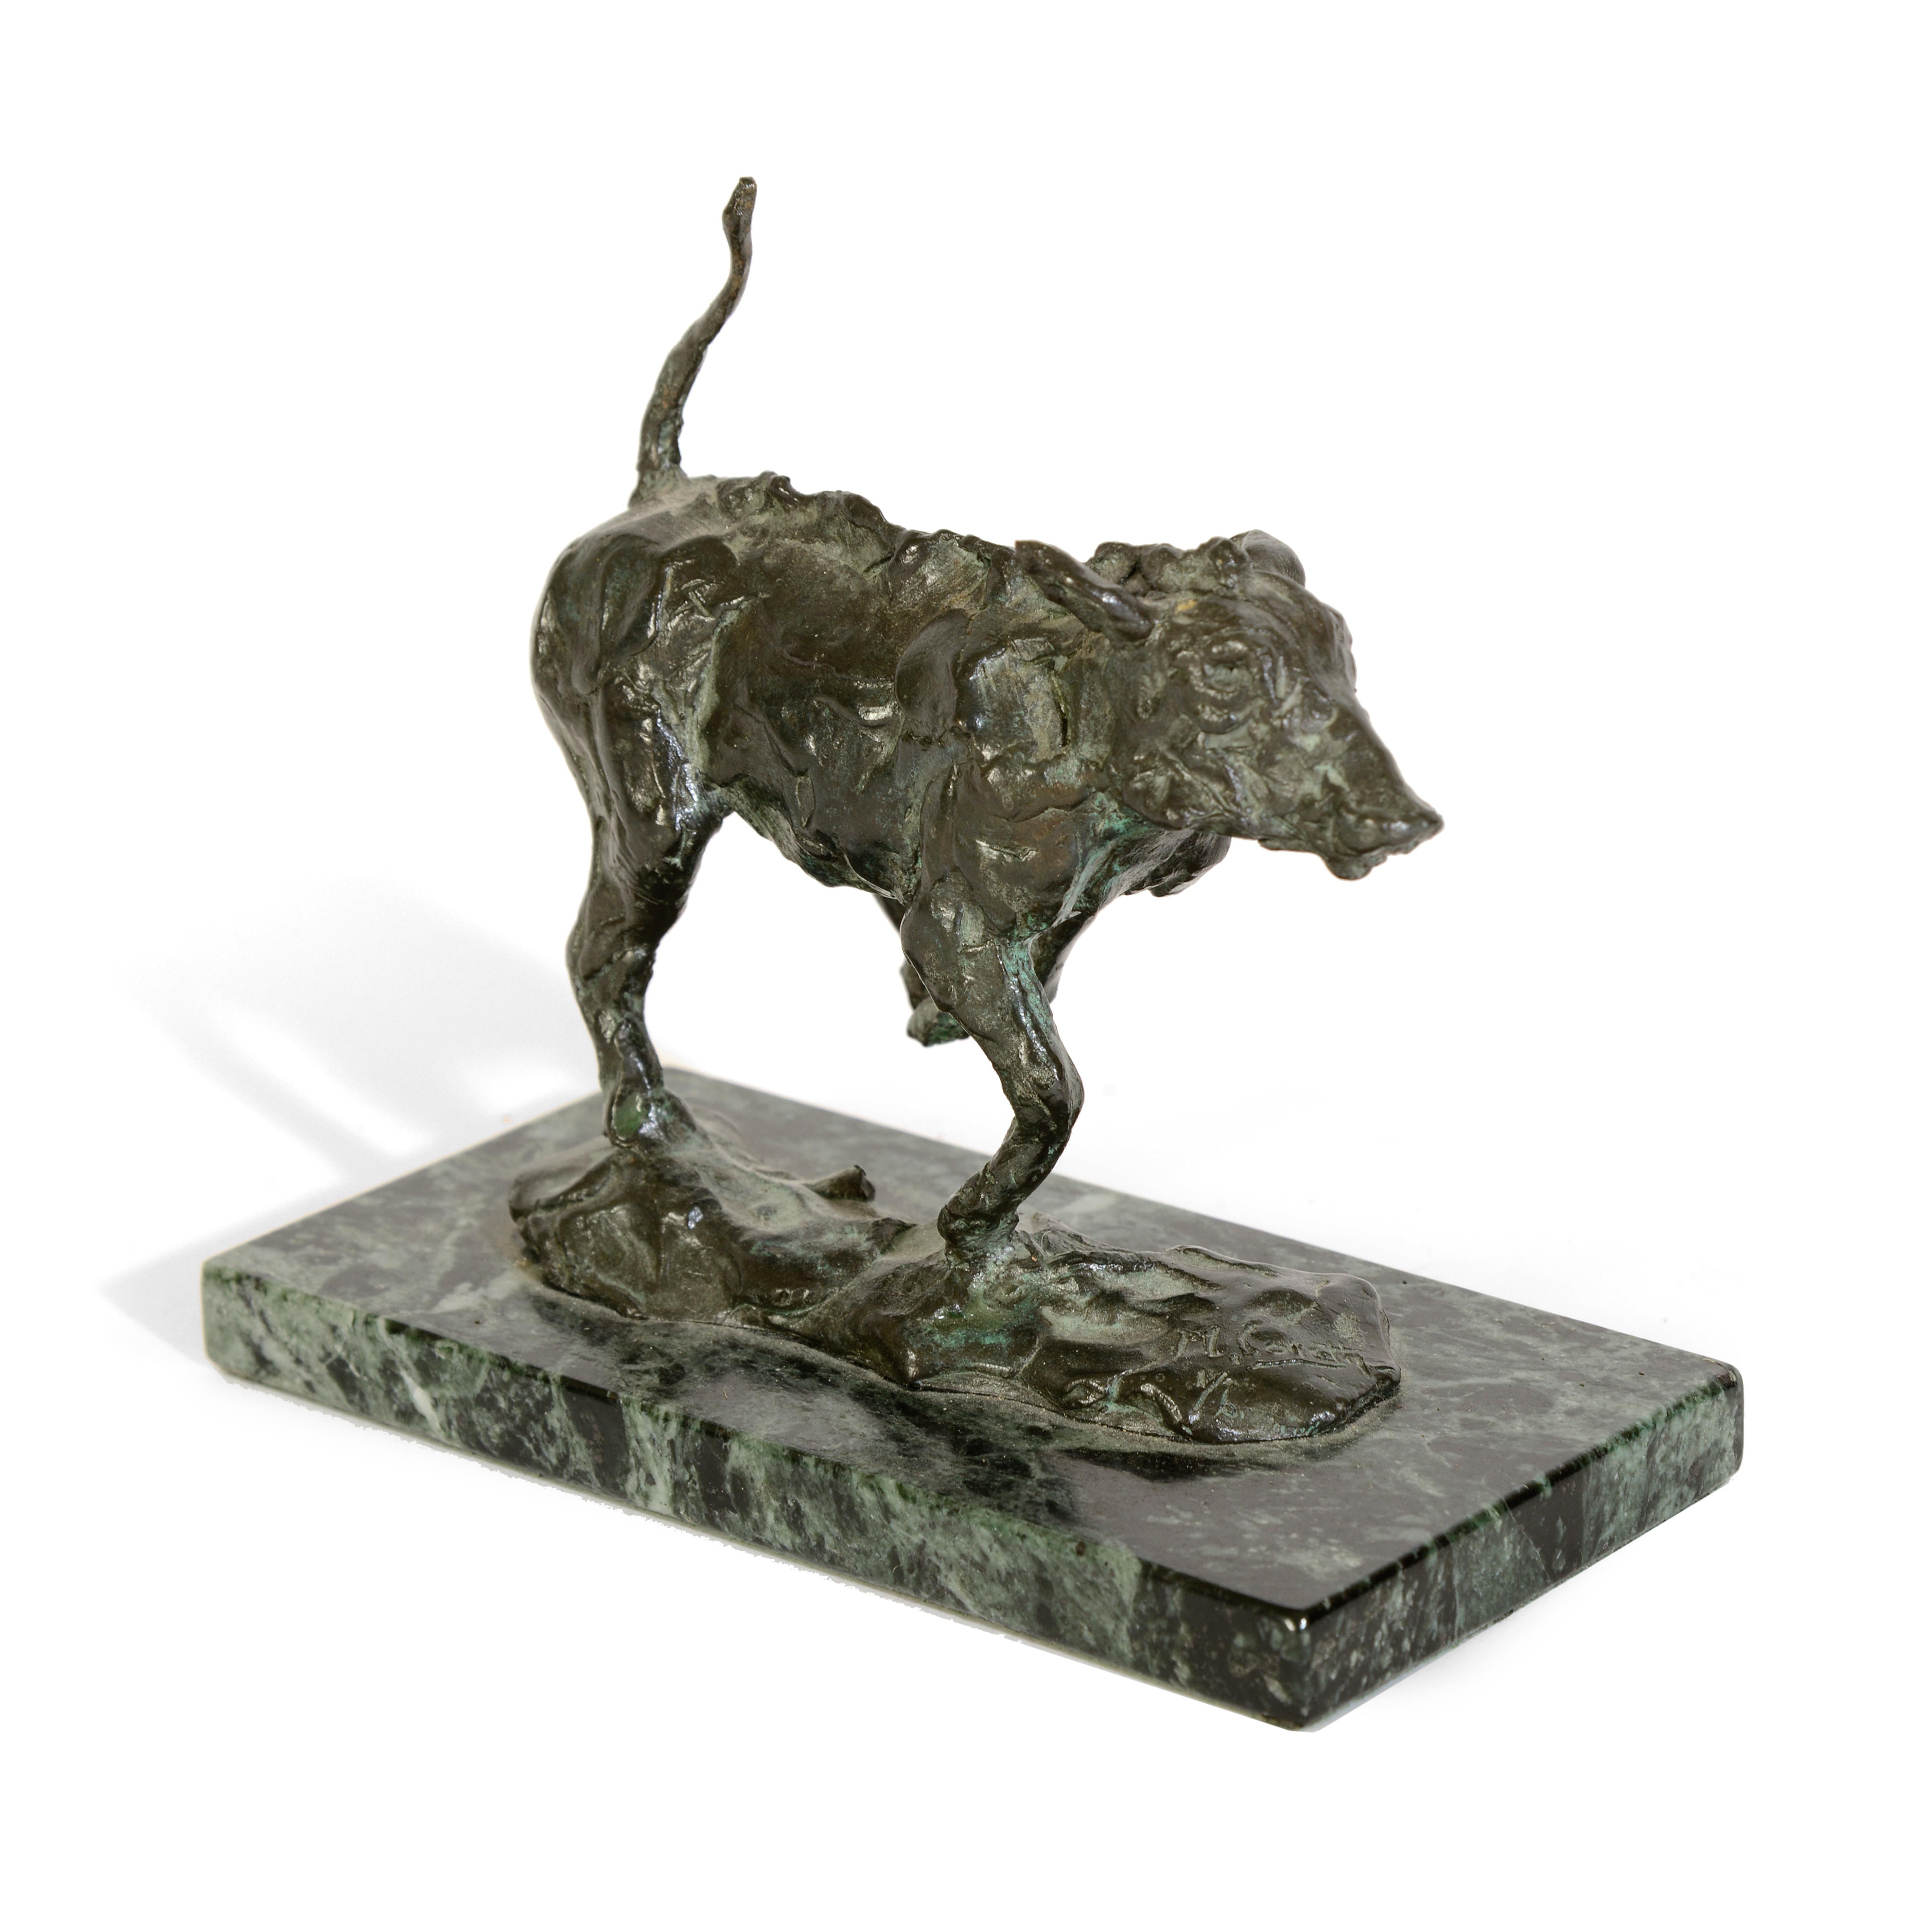 English Mark Coreth limited edition bronze of a warthog piglet